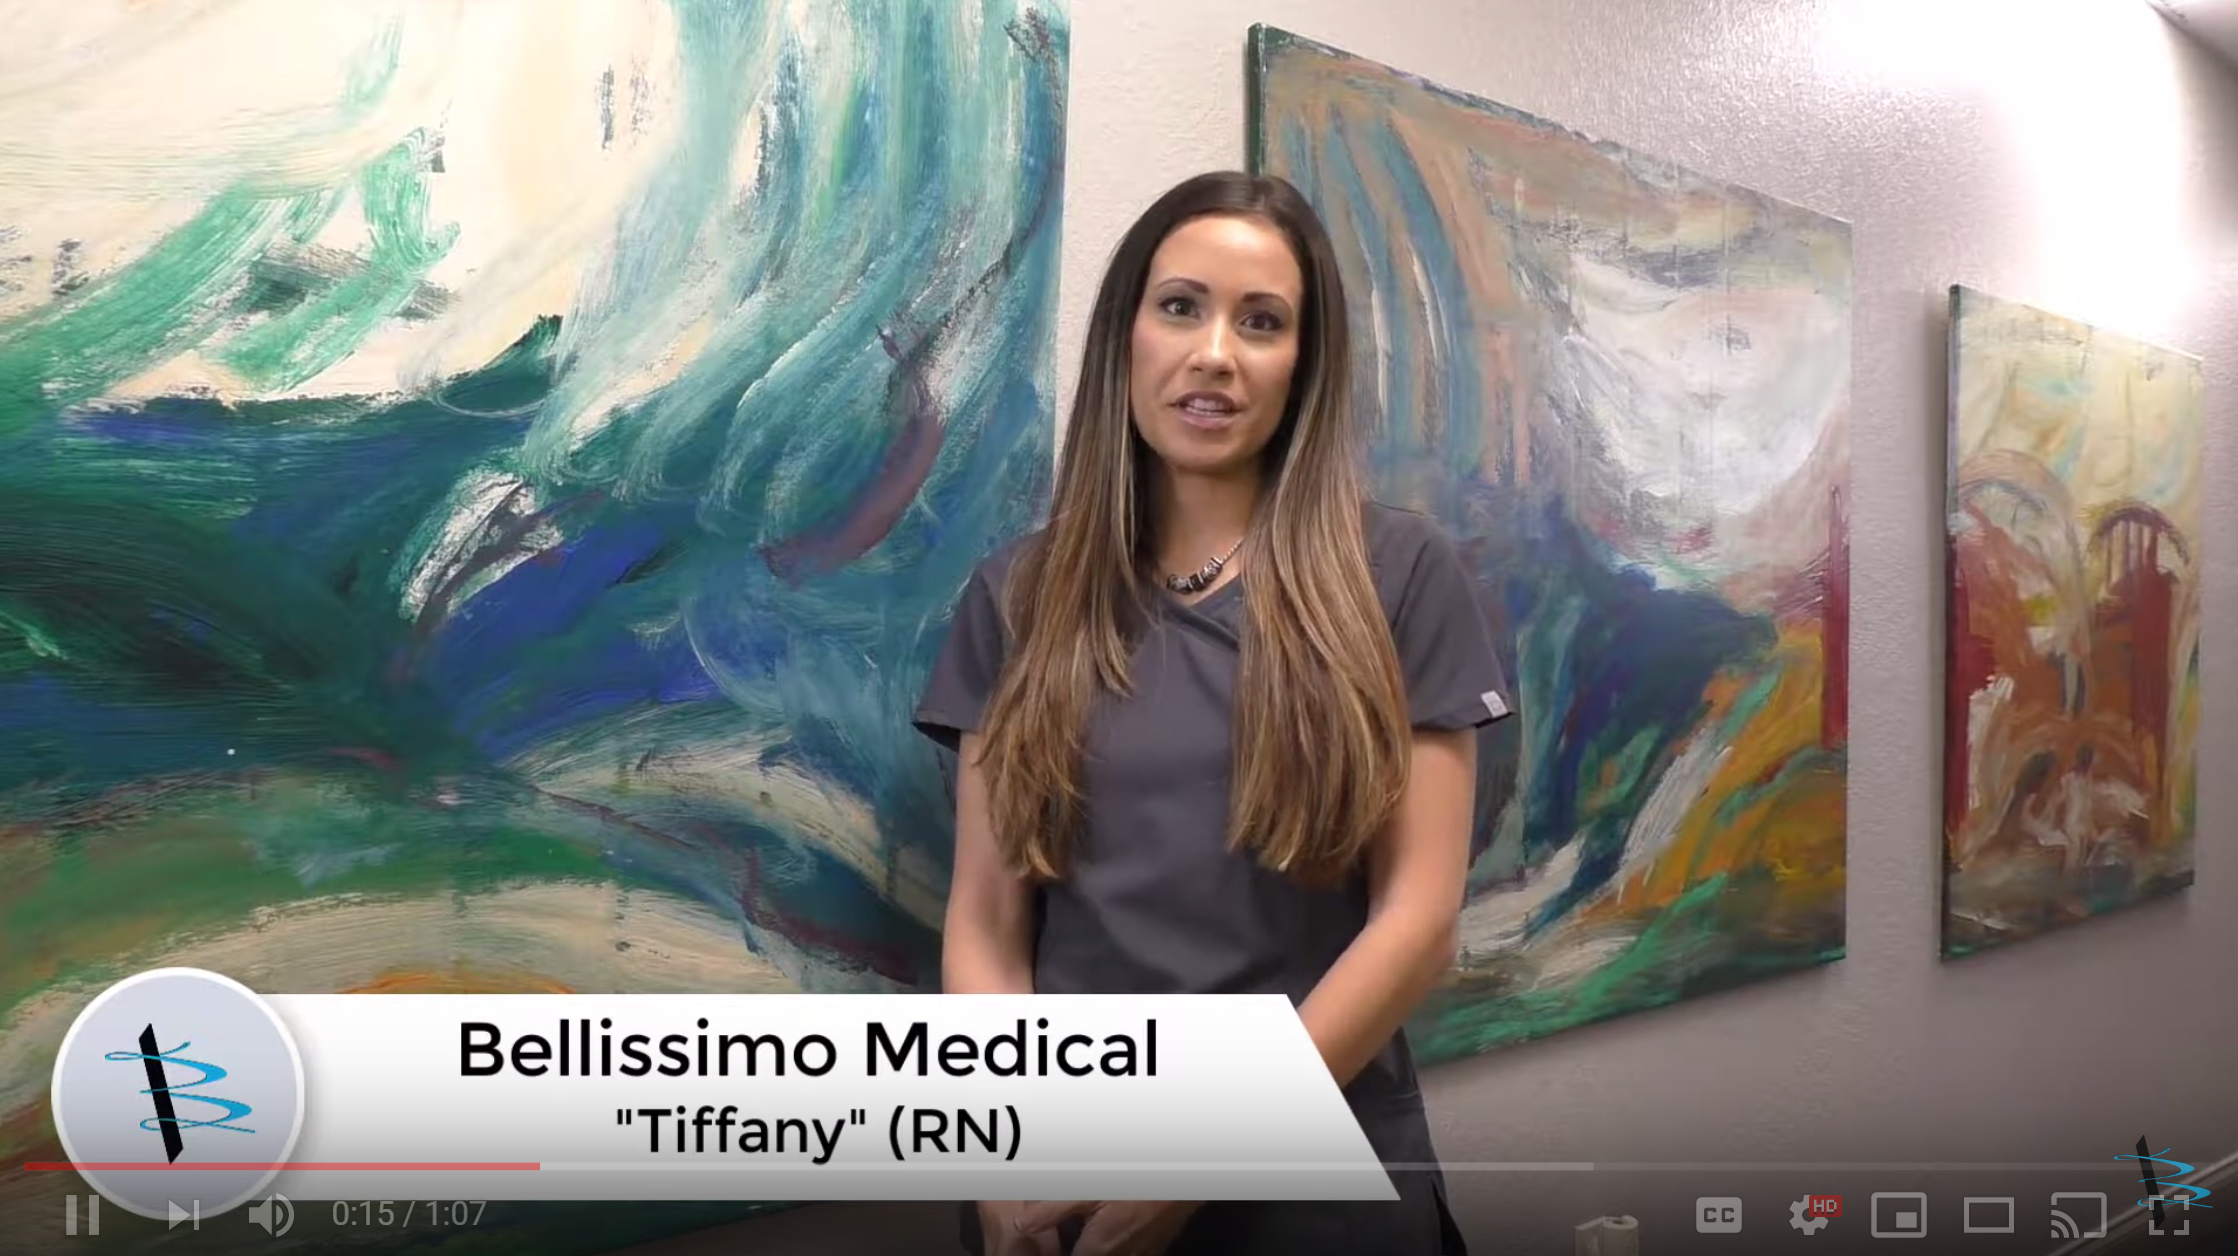 Bellissimo Medical (RN) "Tiffany"